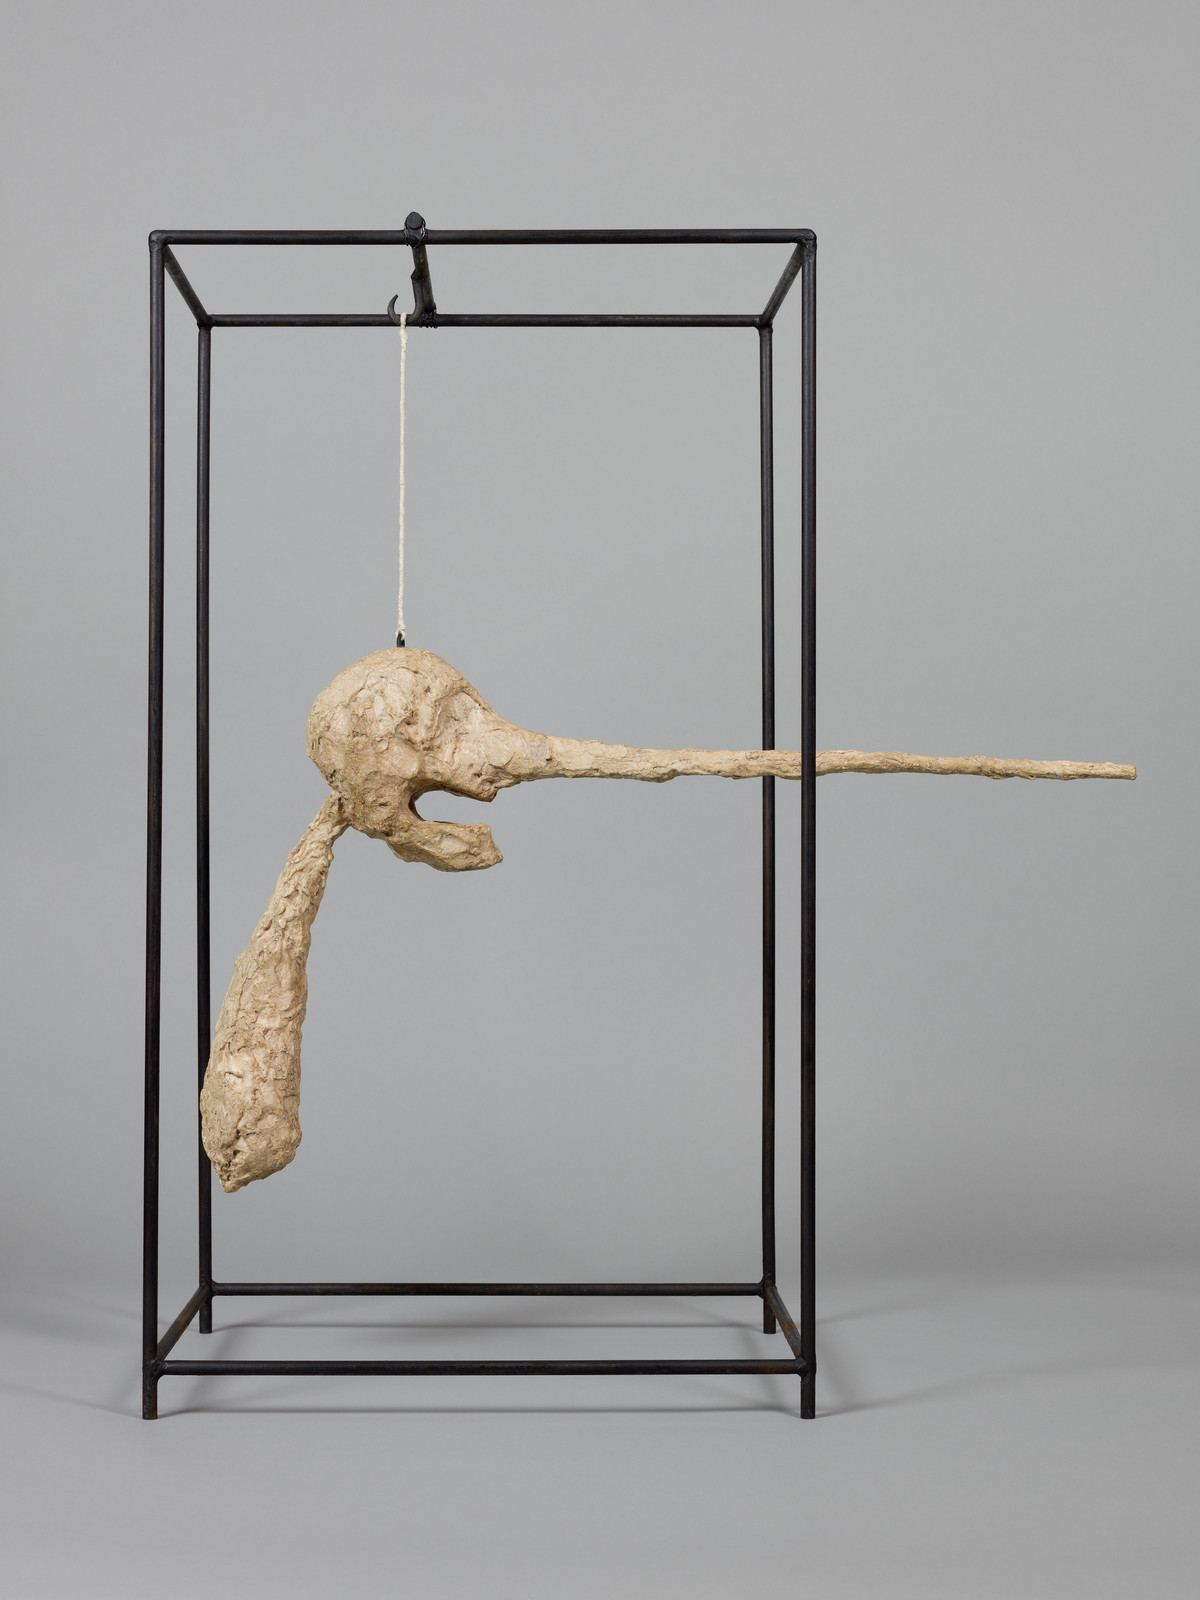 Alberto Giacometti: Le Nez, 1947-49, Gips, 43.6x9x61.1 cm, Fondation Giacometti, Paris

